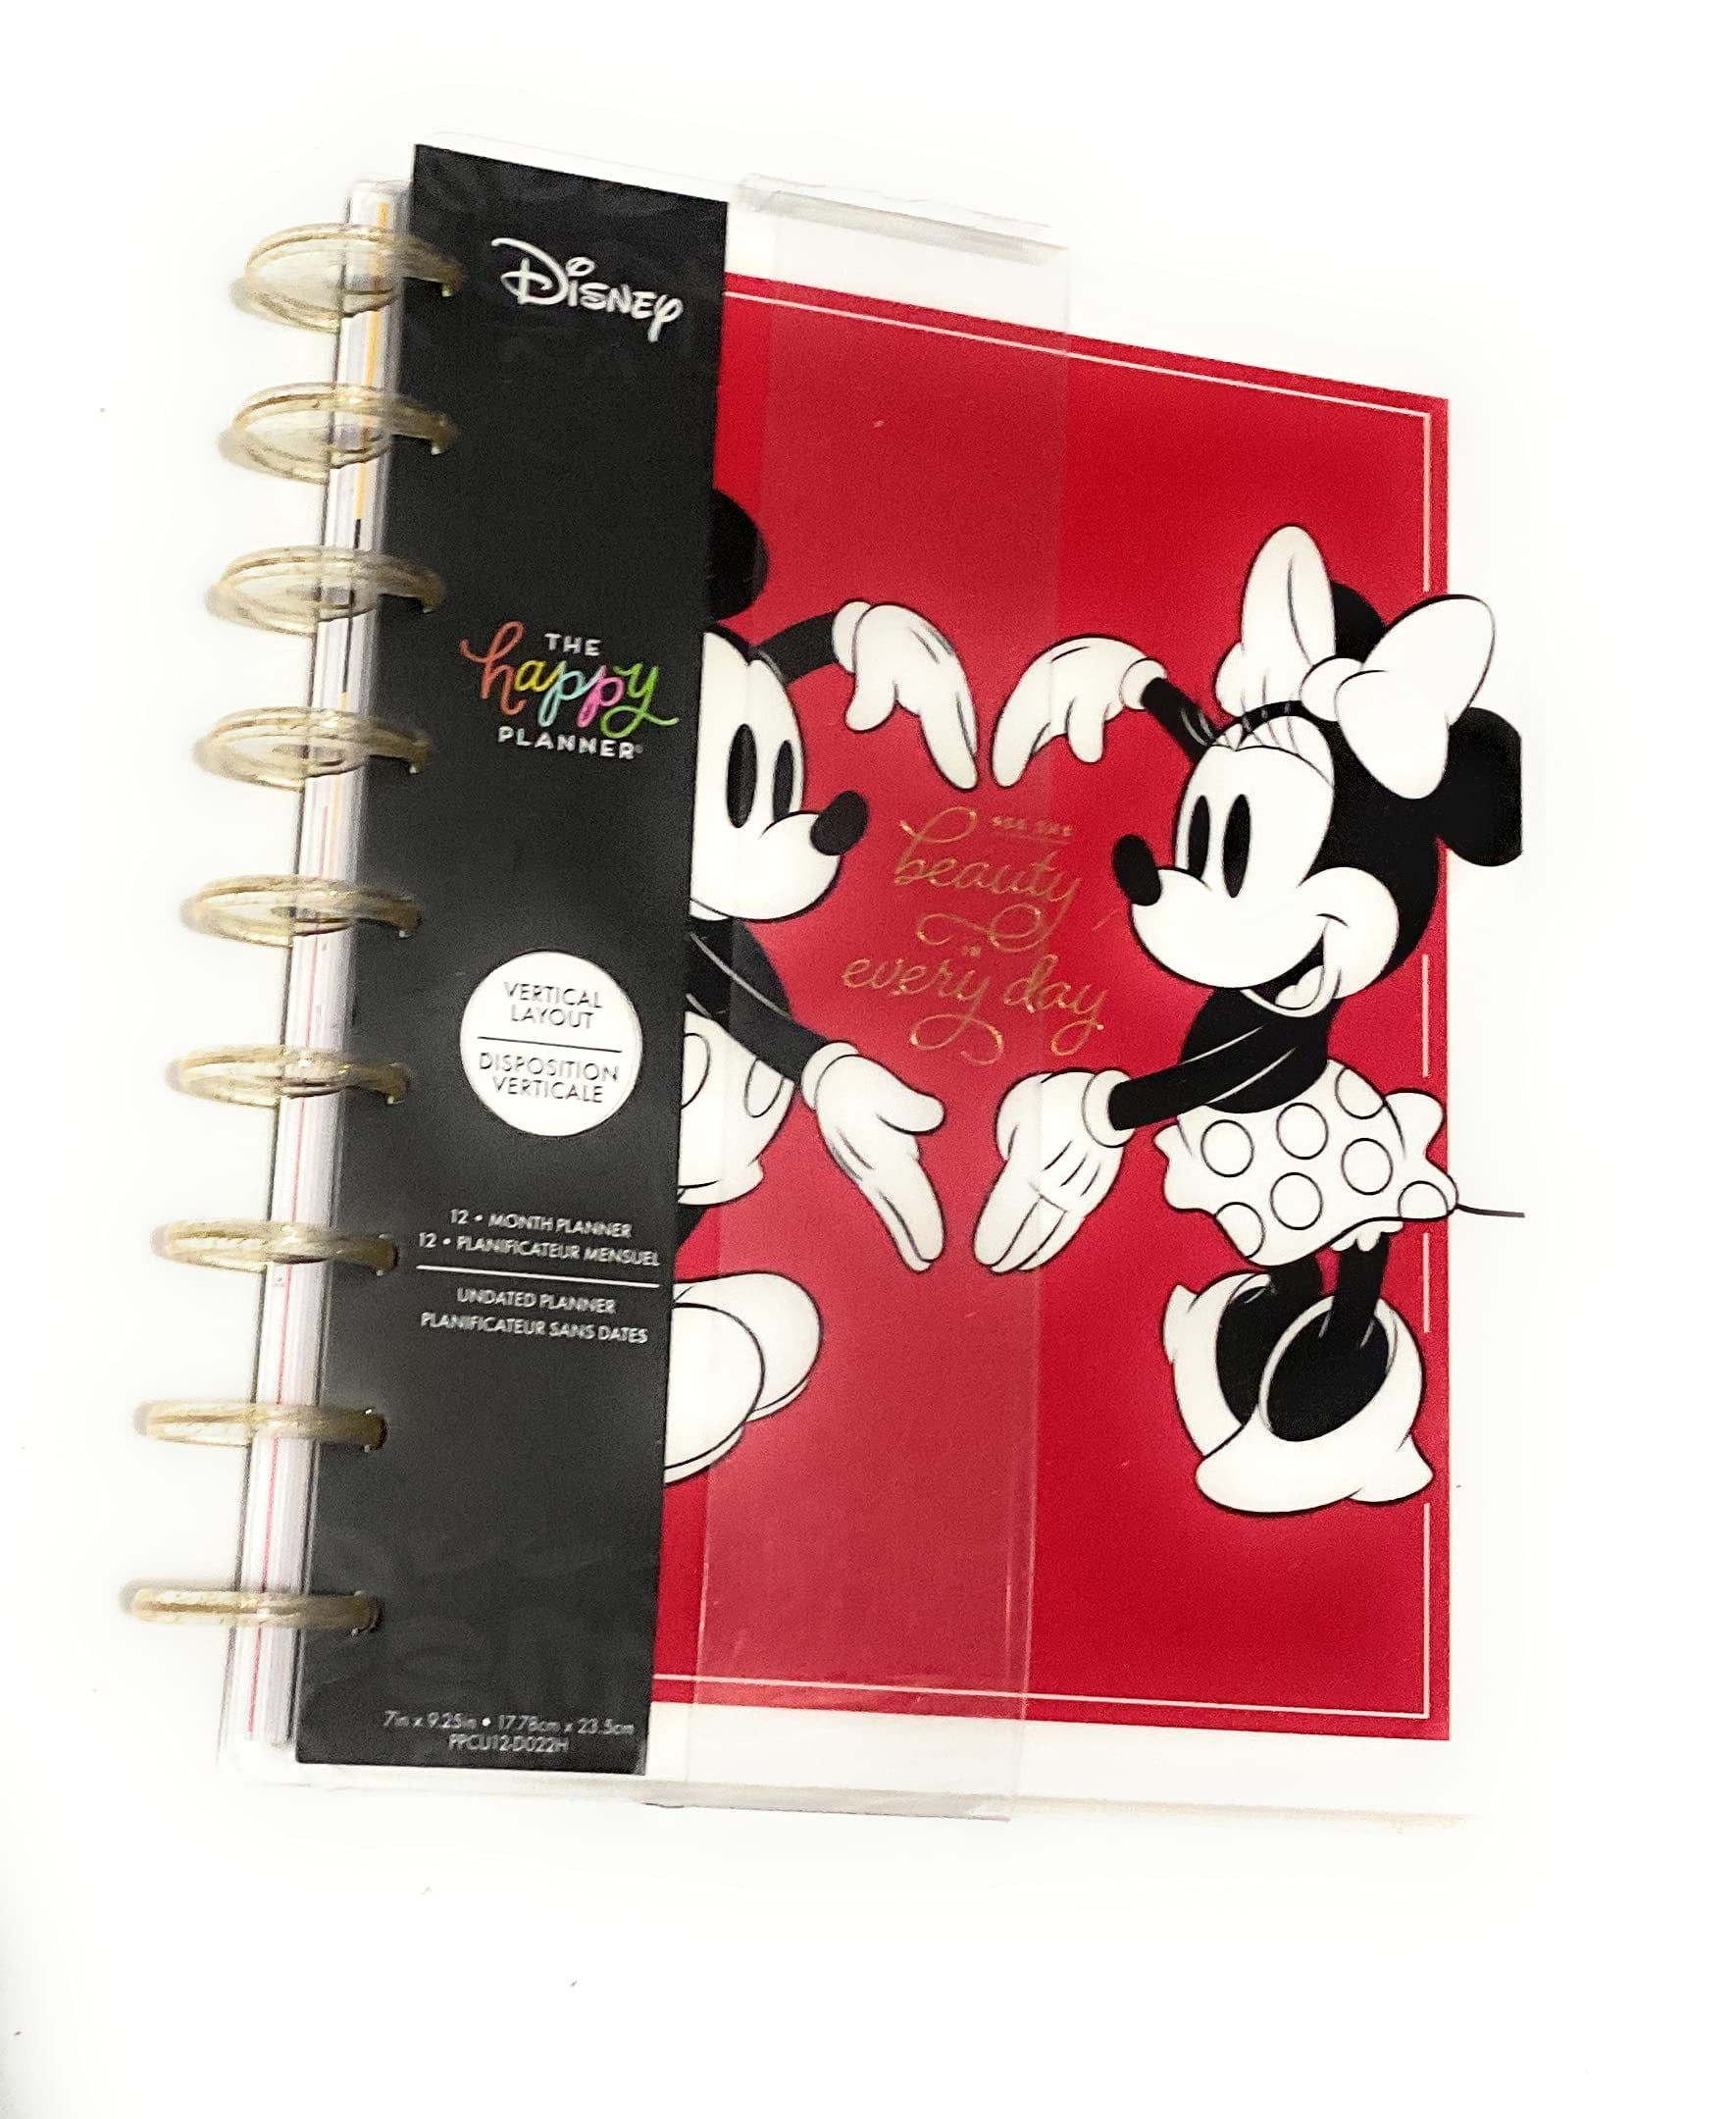 Disney Store Disney Classics Notebook and Stickers